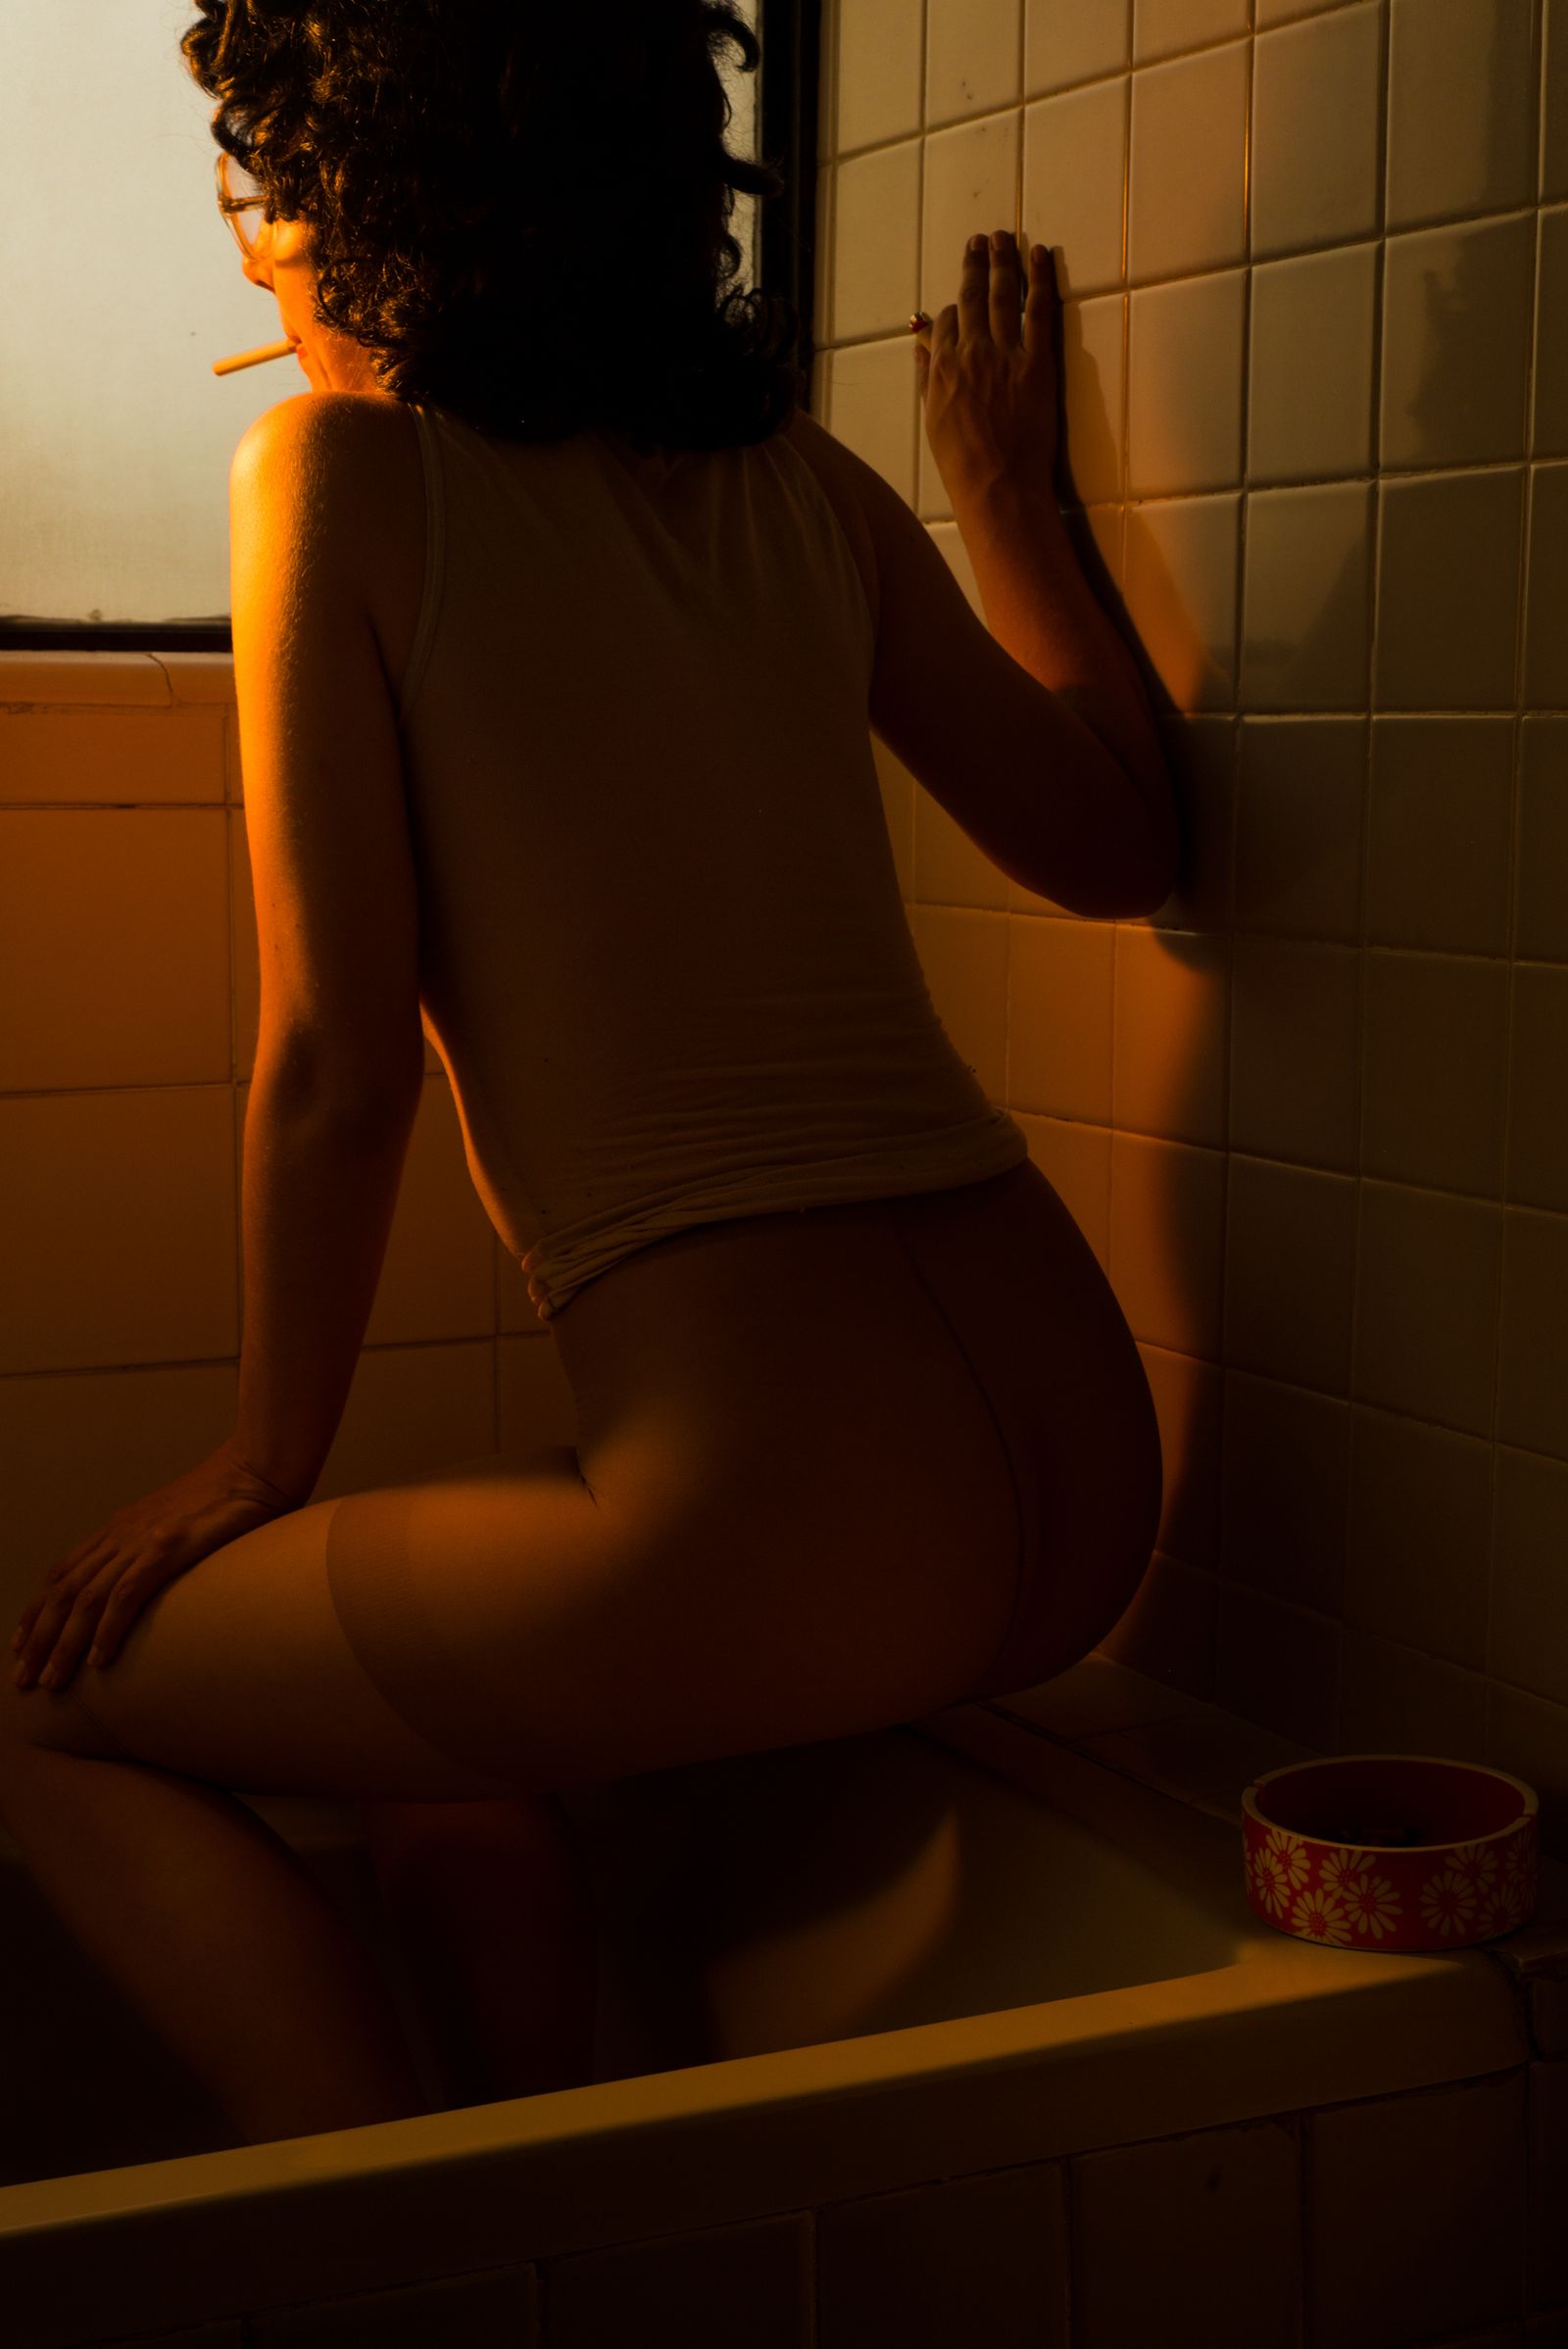 © Tania Franco Klein - Locked Rooms, (Self-portrait)